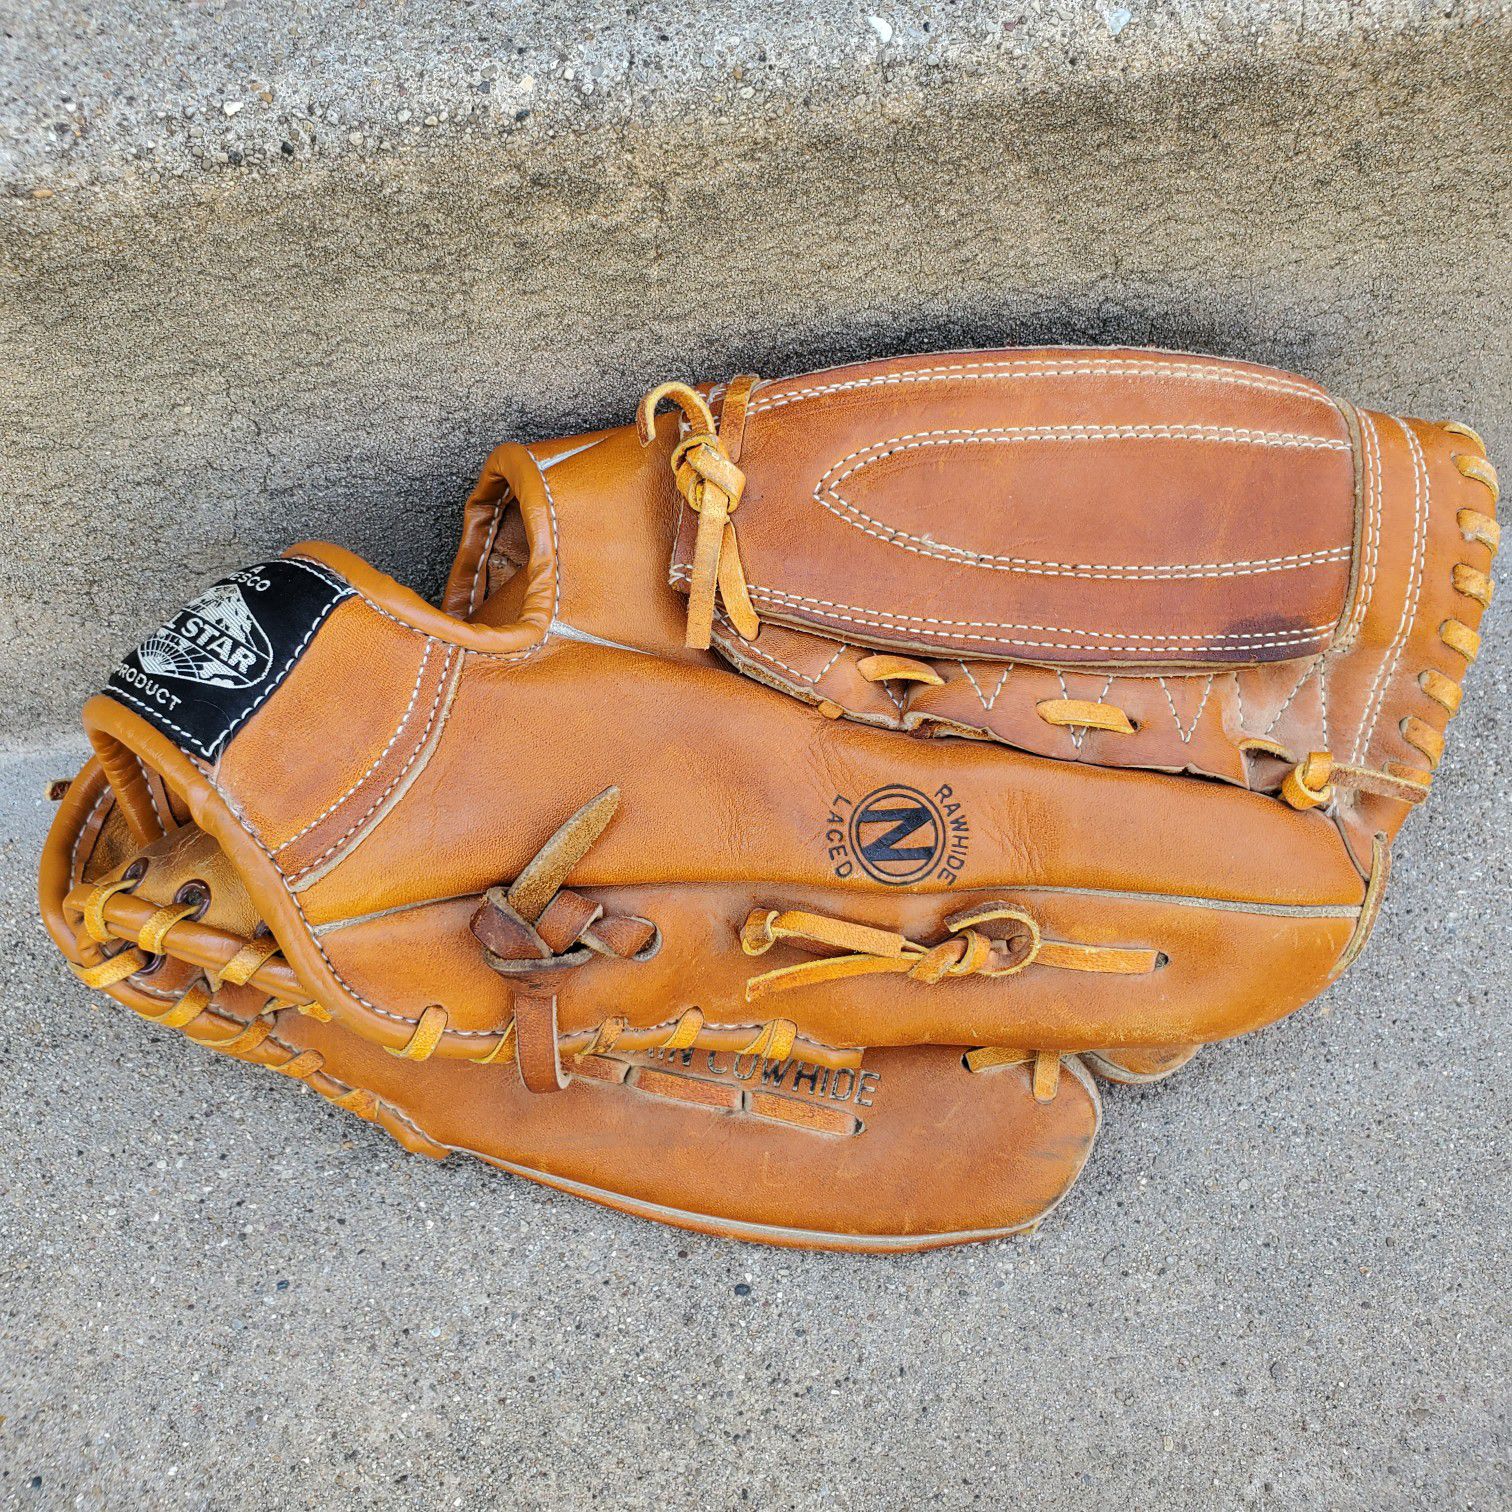 Vintage Nesco Baseball/Softball Glove #9750 Deep Scoop Cowhide Leather Pro-Player Model